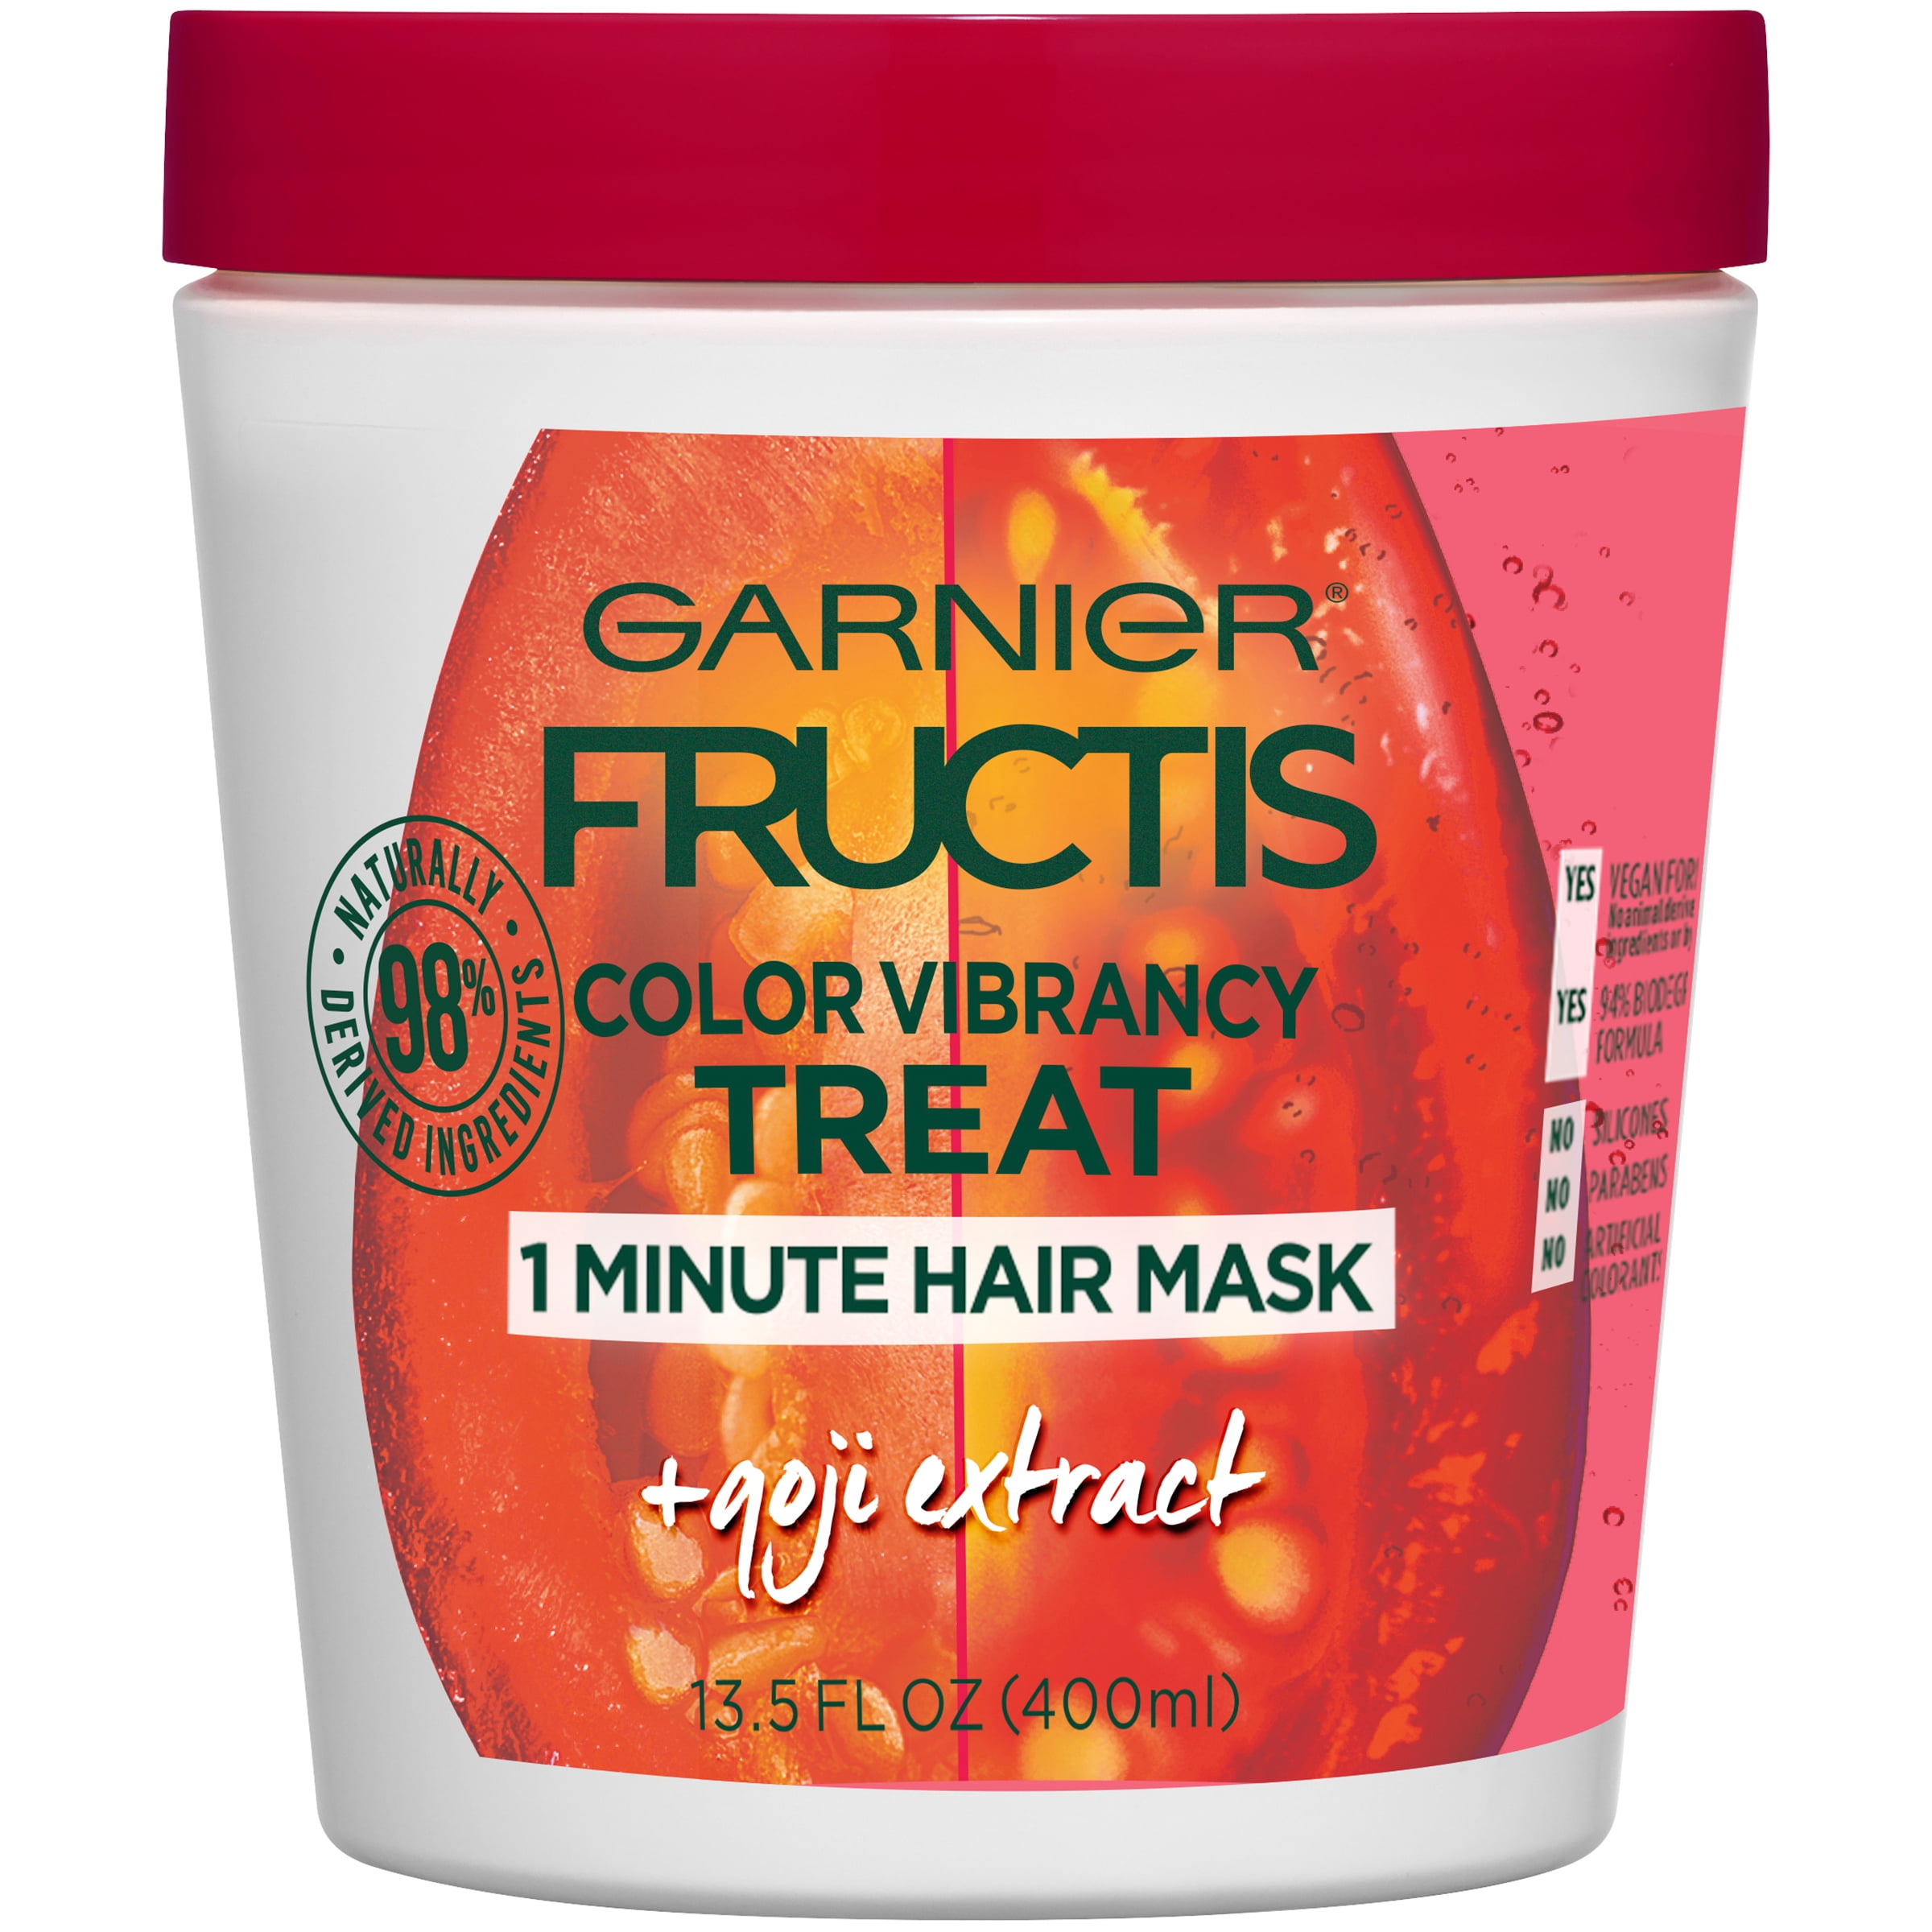 garnier-fructis-color-vibrancy-treat-1-minute-hair-mask-with-goji